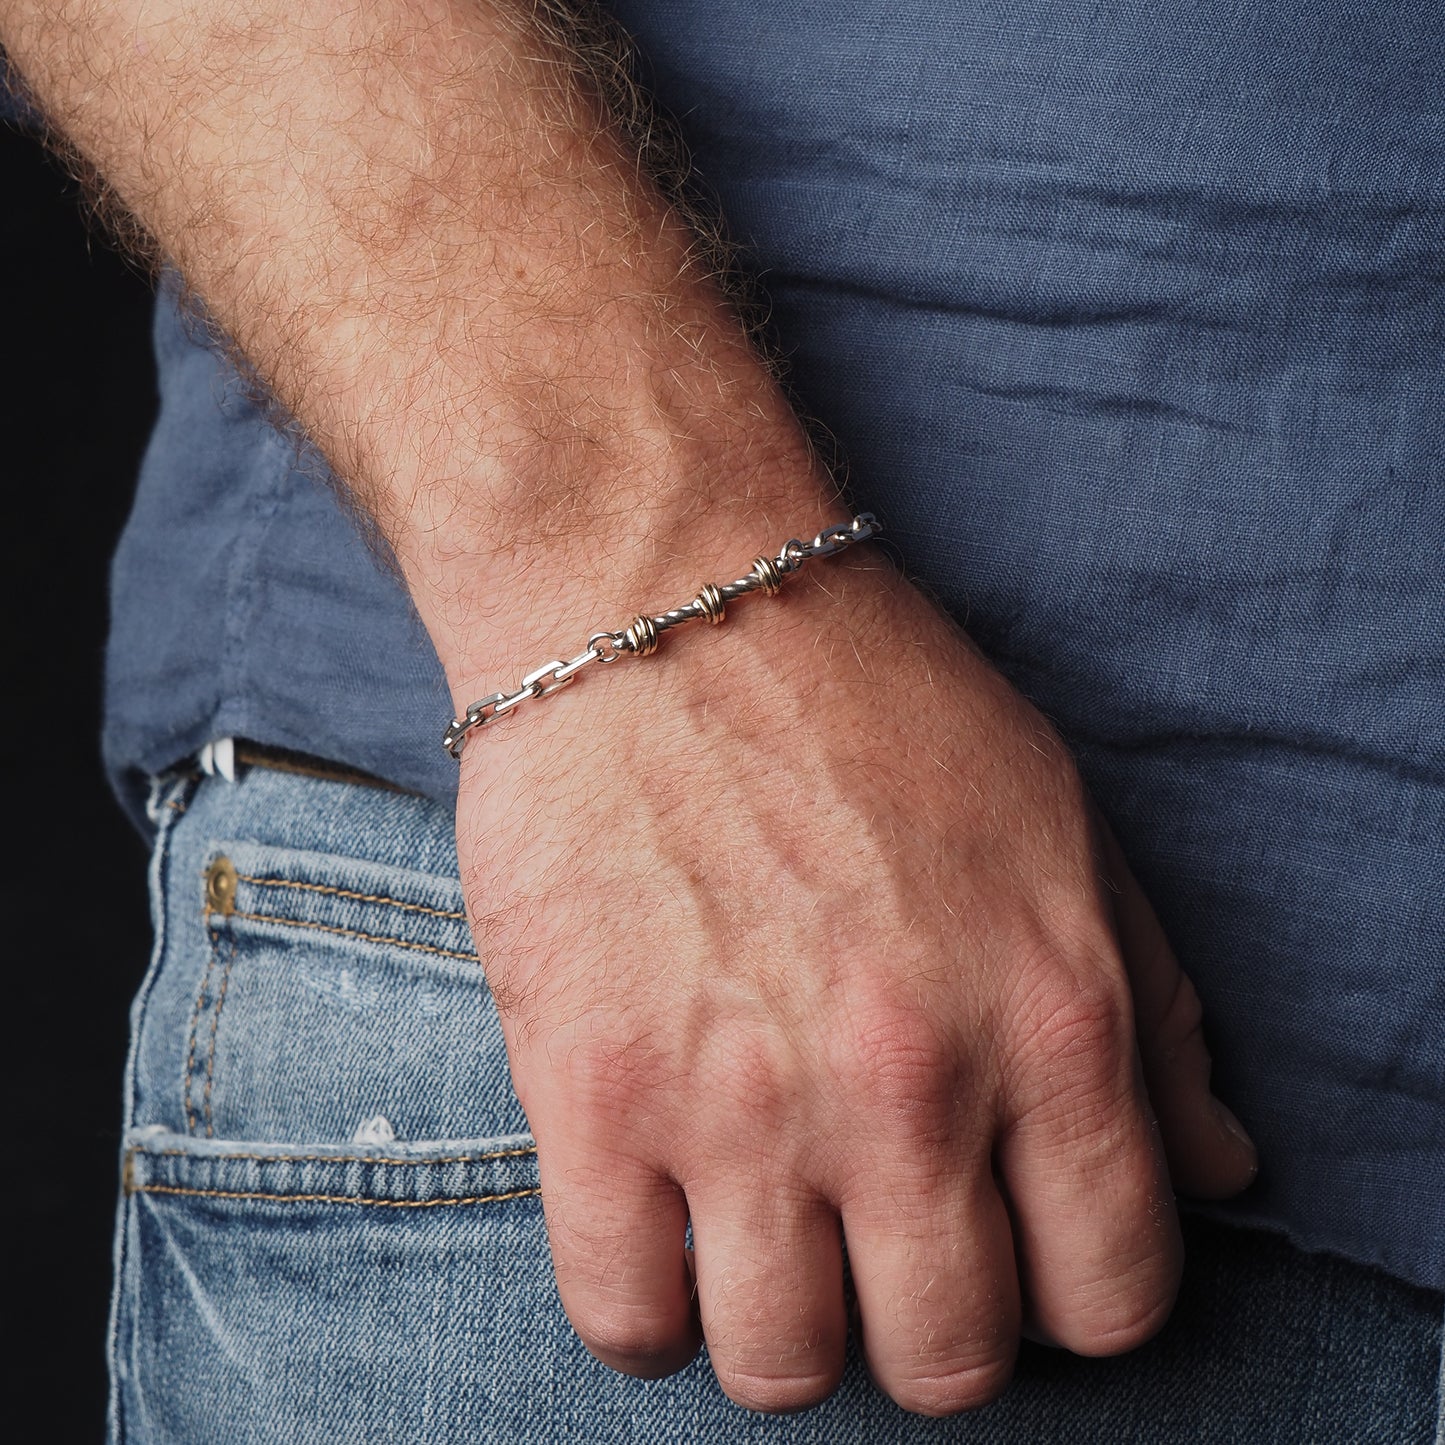 Lucky Knot Anchor Weave Bracelet with Unique Six Clasp - Symbolizes Good Fortune